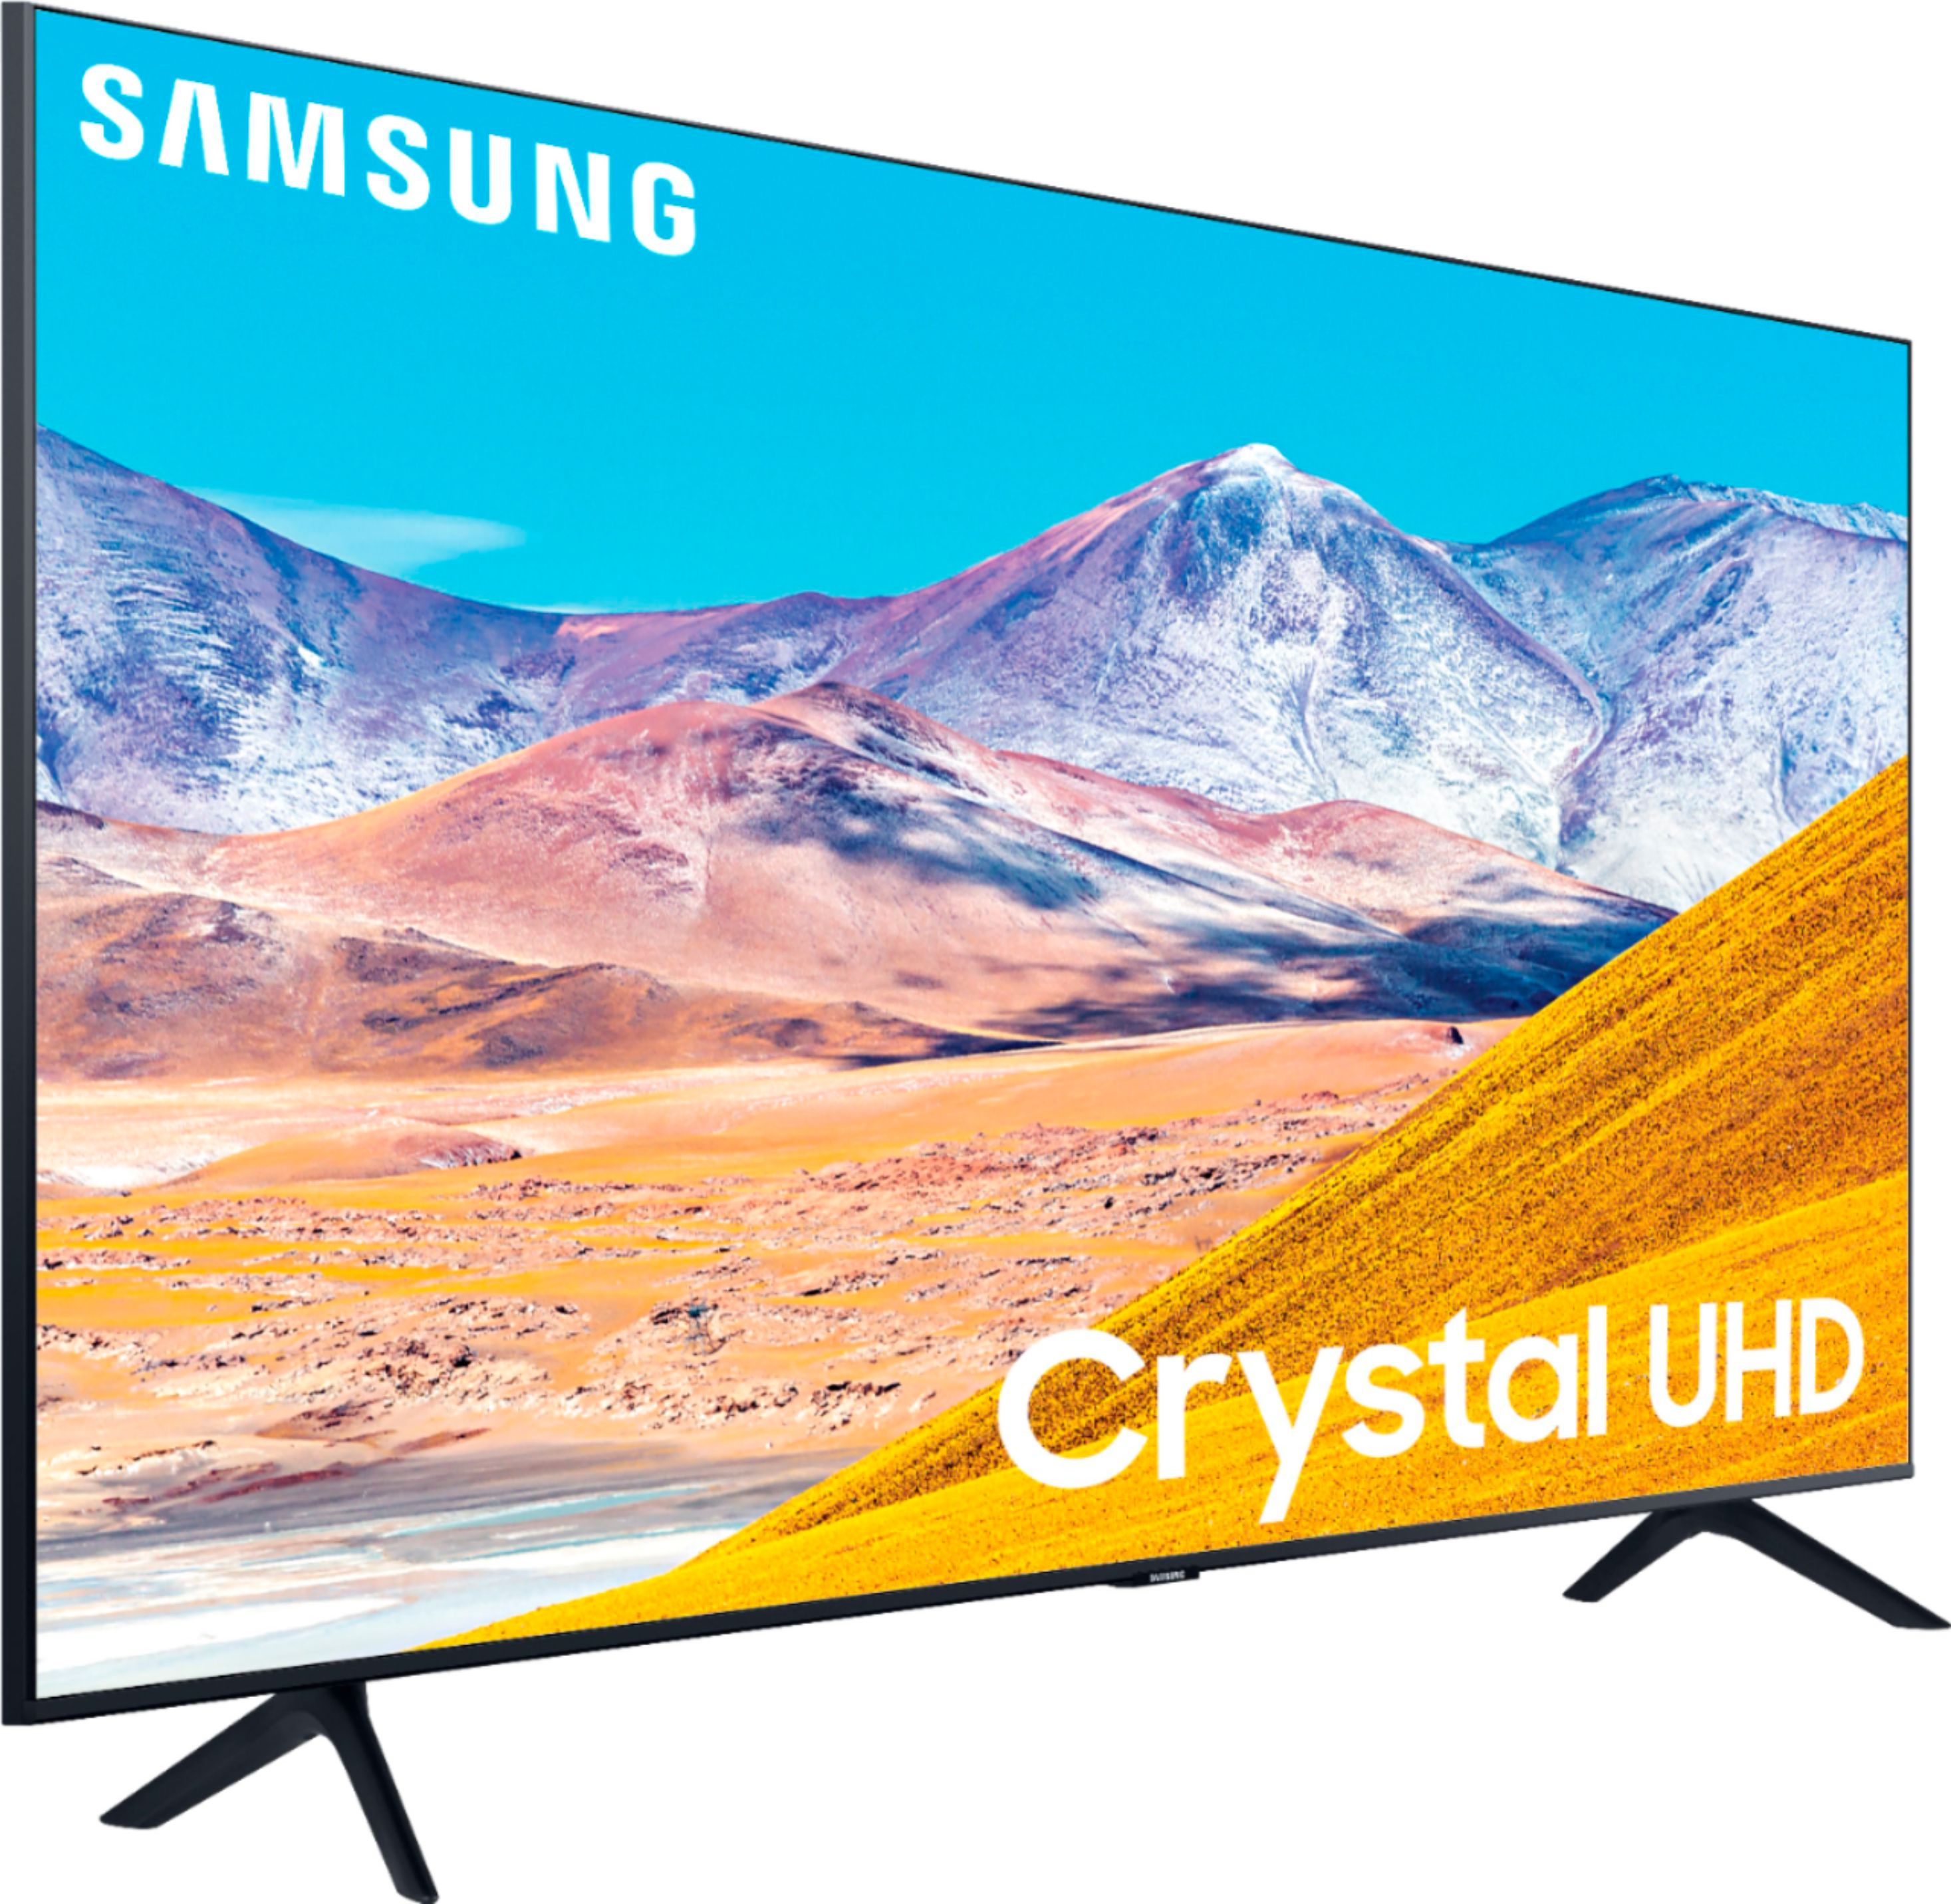 Best Samsung Class 8 Series LED 4K UHD Smart TV UN55TU8000FXZA